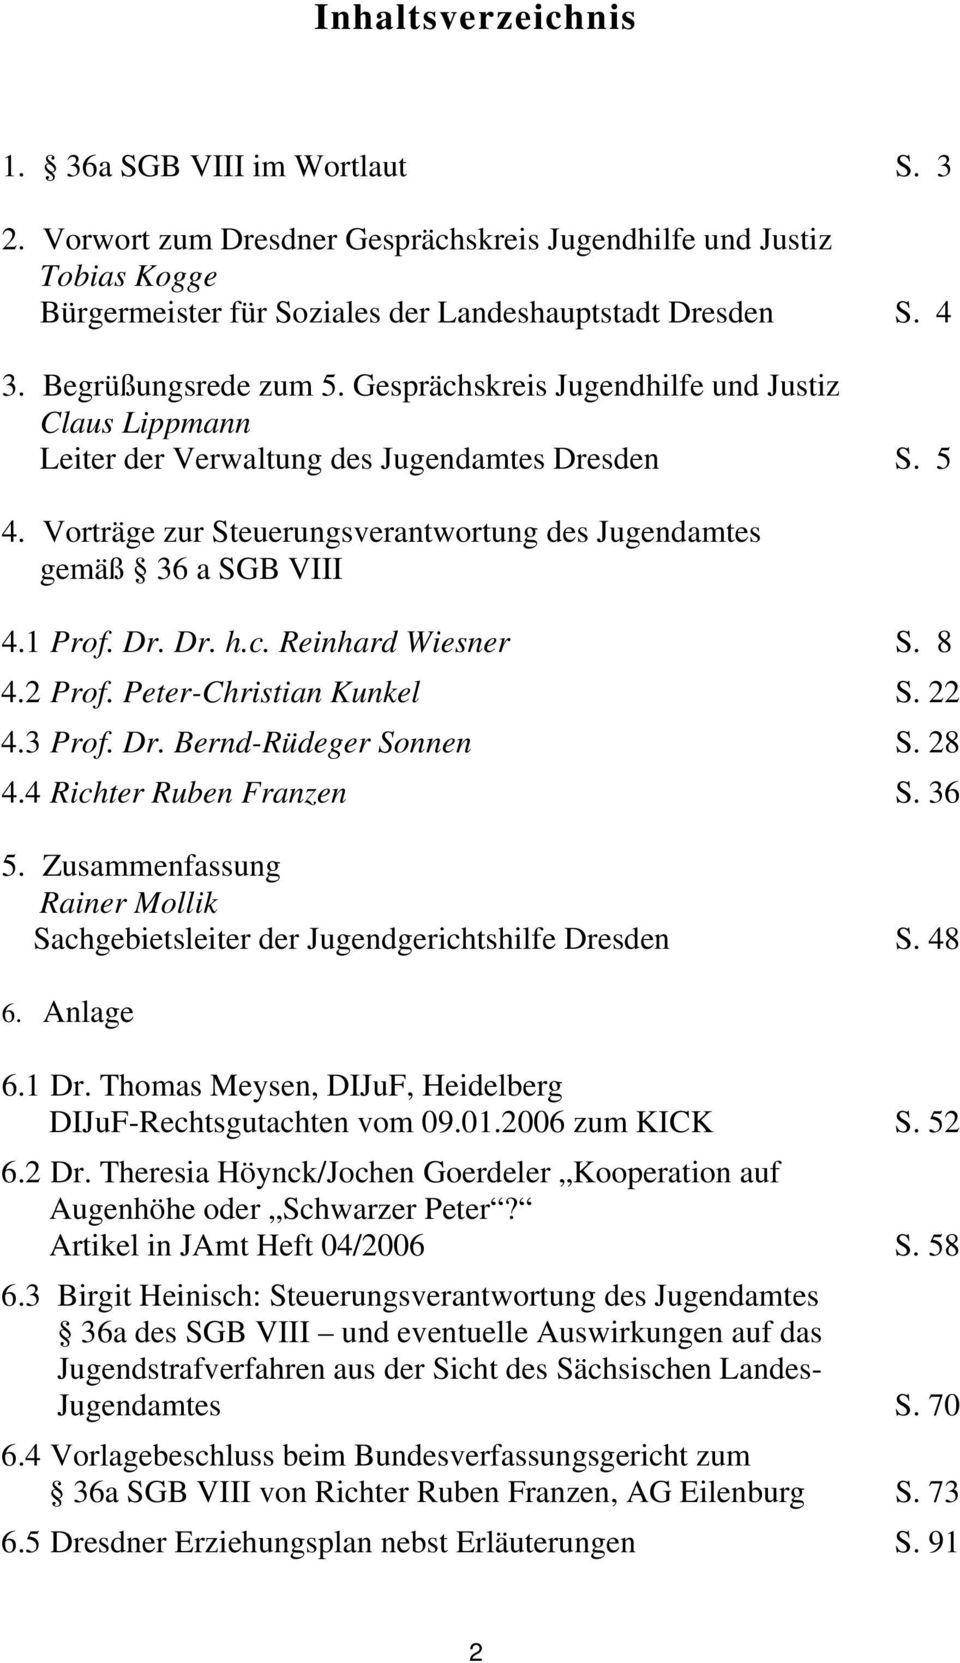 Vorträge zur Steuerungsverantwortung des Jugendamtes gemäß 36 a SGB VIII 4.1 Prof. Dr. Dr. h.c. Reinhard Wiesner S. 8 4.2 Prof. Peter-Christian Kunkel S. 22 4.3 Prof. Dr. Bernd-Rüdeger Sonnen S. 28 4.